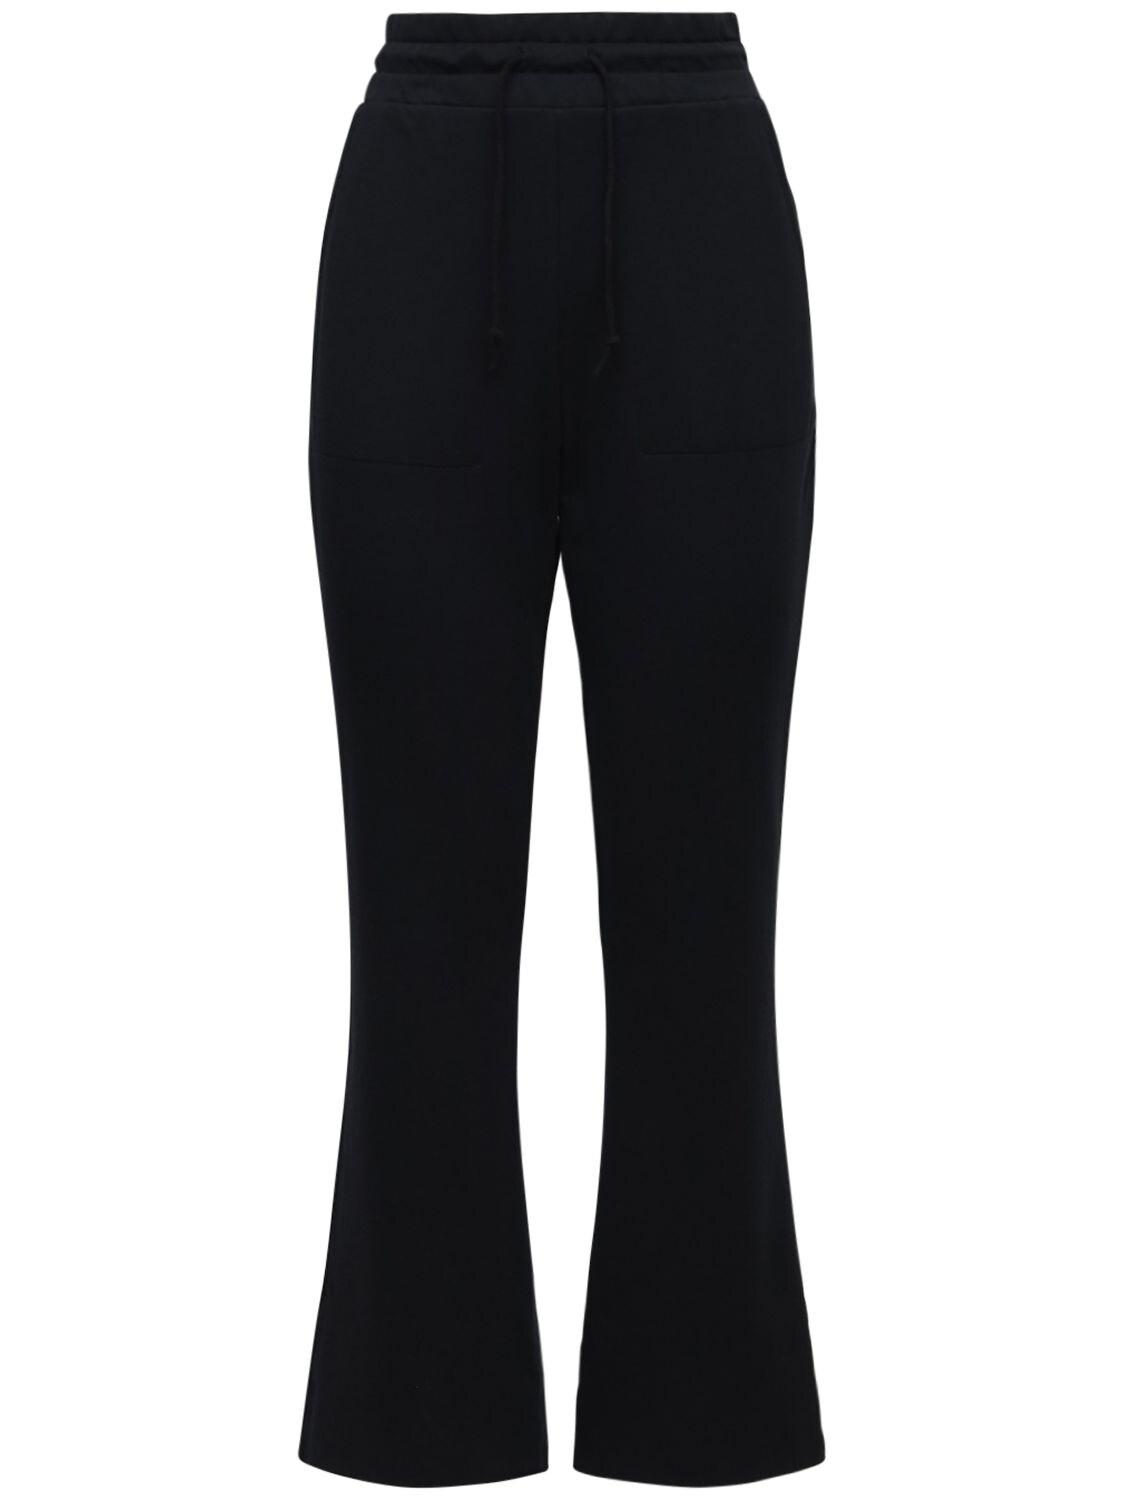 Nike Dri-fit Flared Yoga Full Length Pants in Black | Lyst